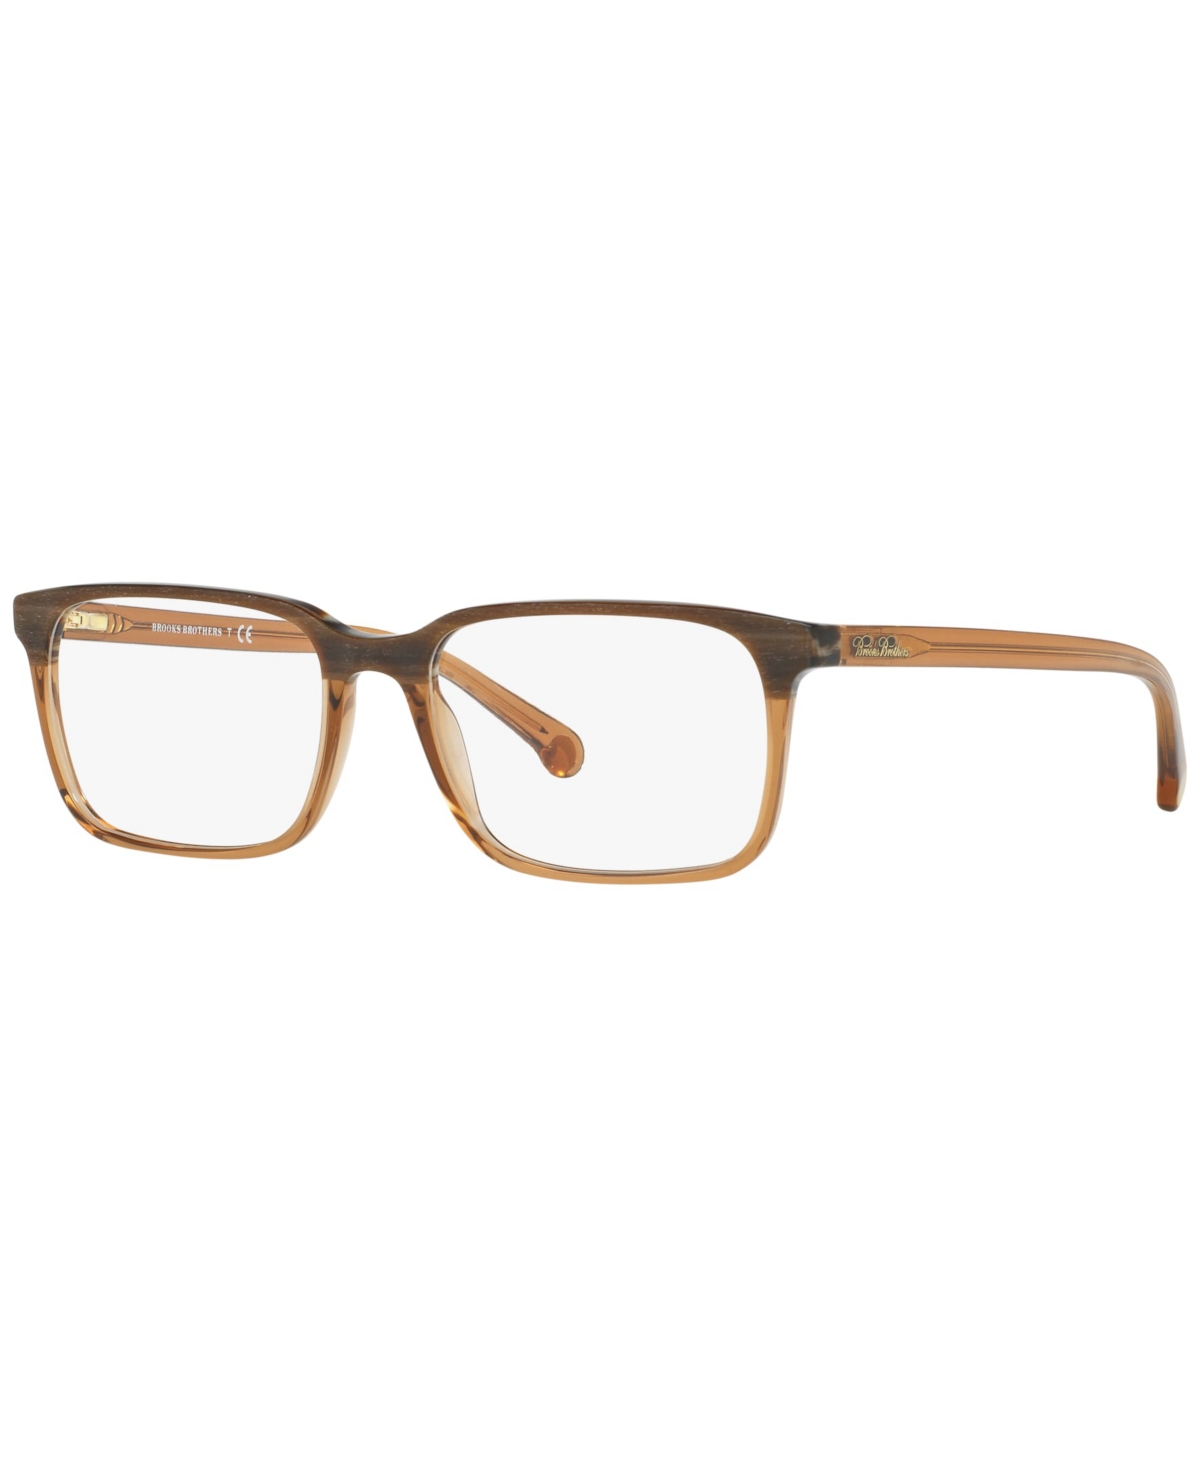 Men's Eyeglasses, BB2033 - Brown